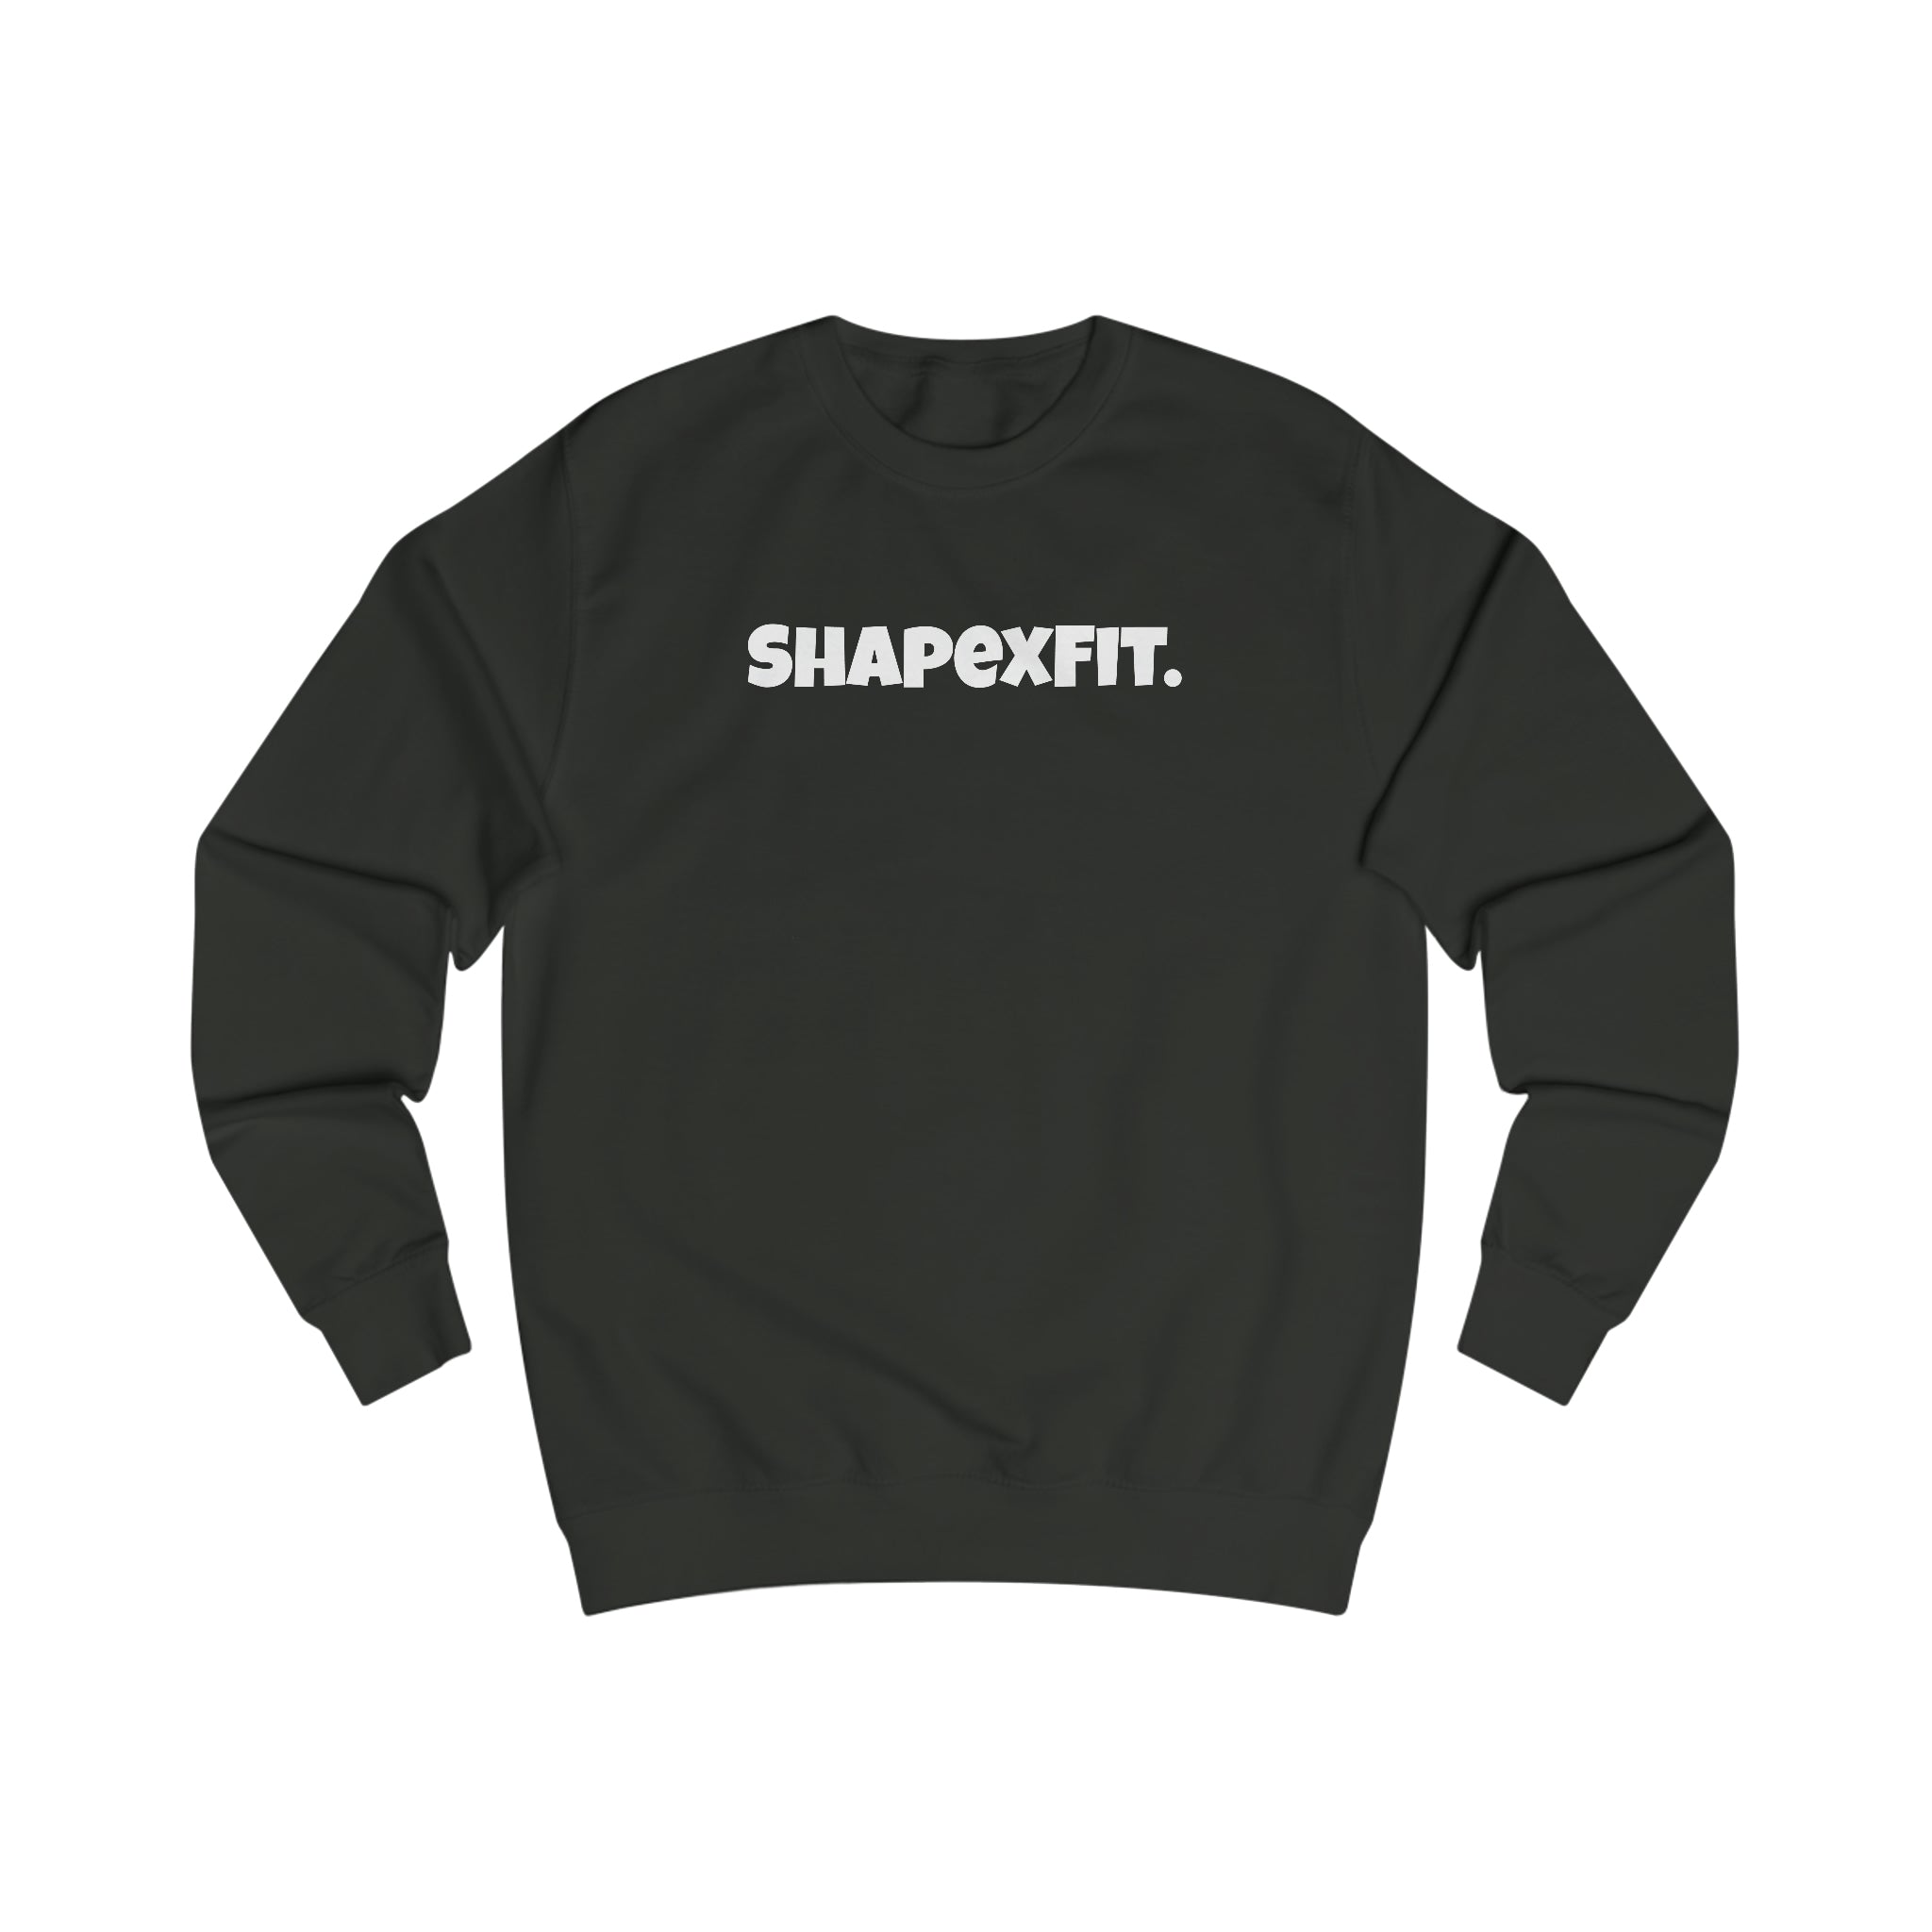 ShapexFit. Sweatshirt